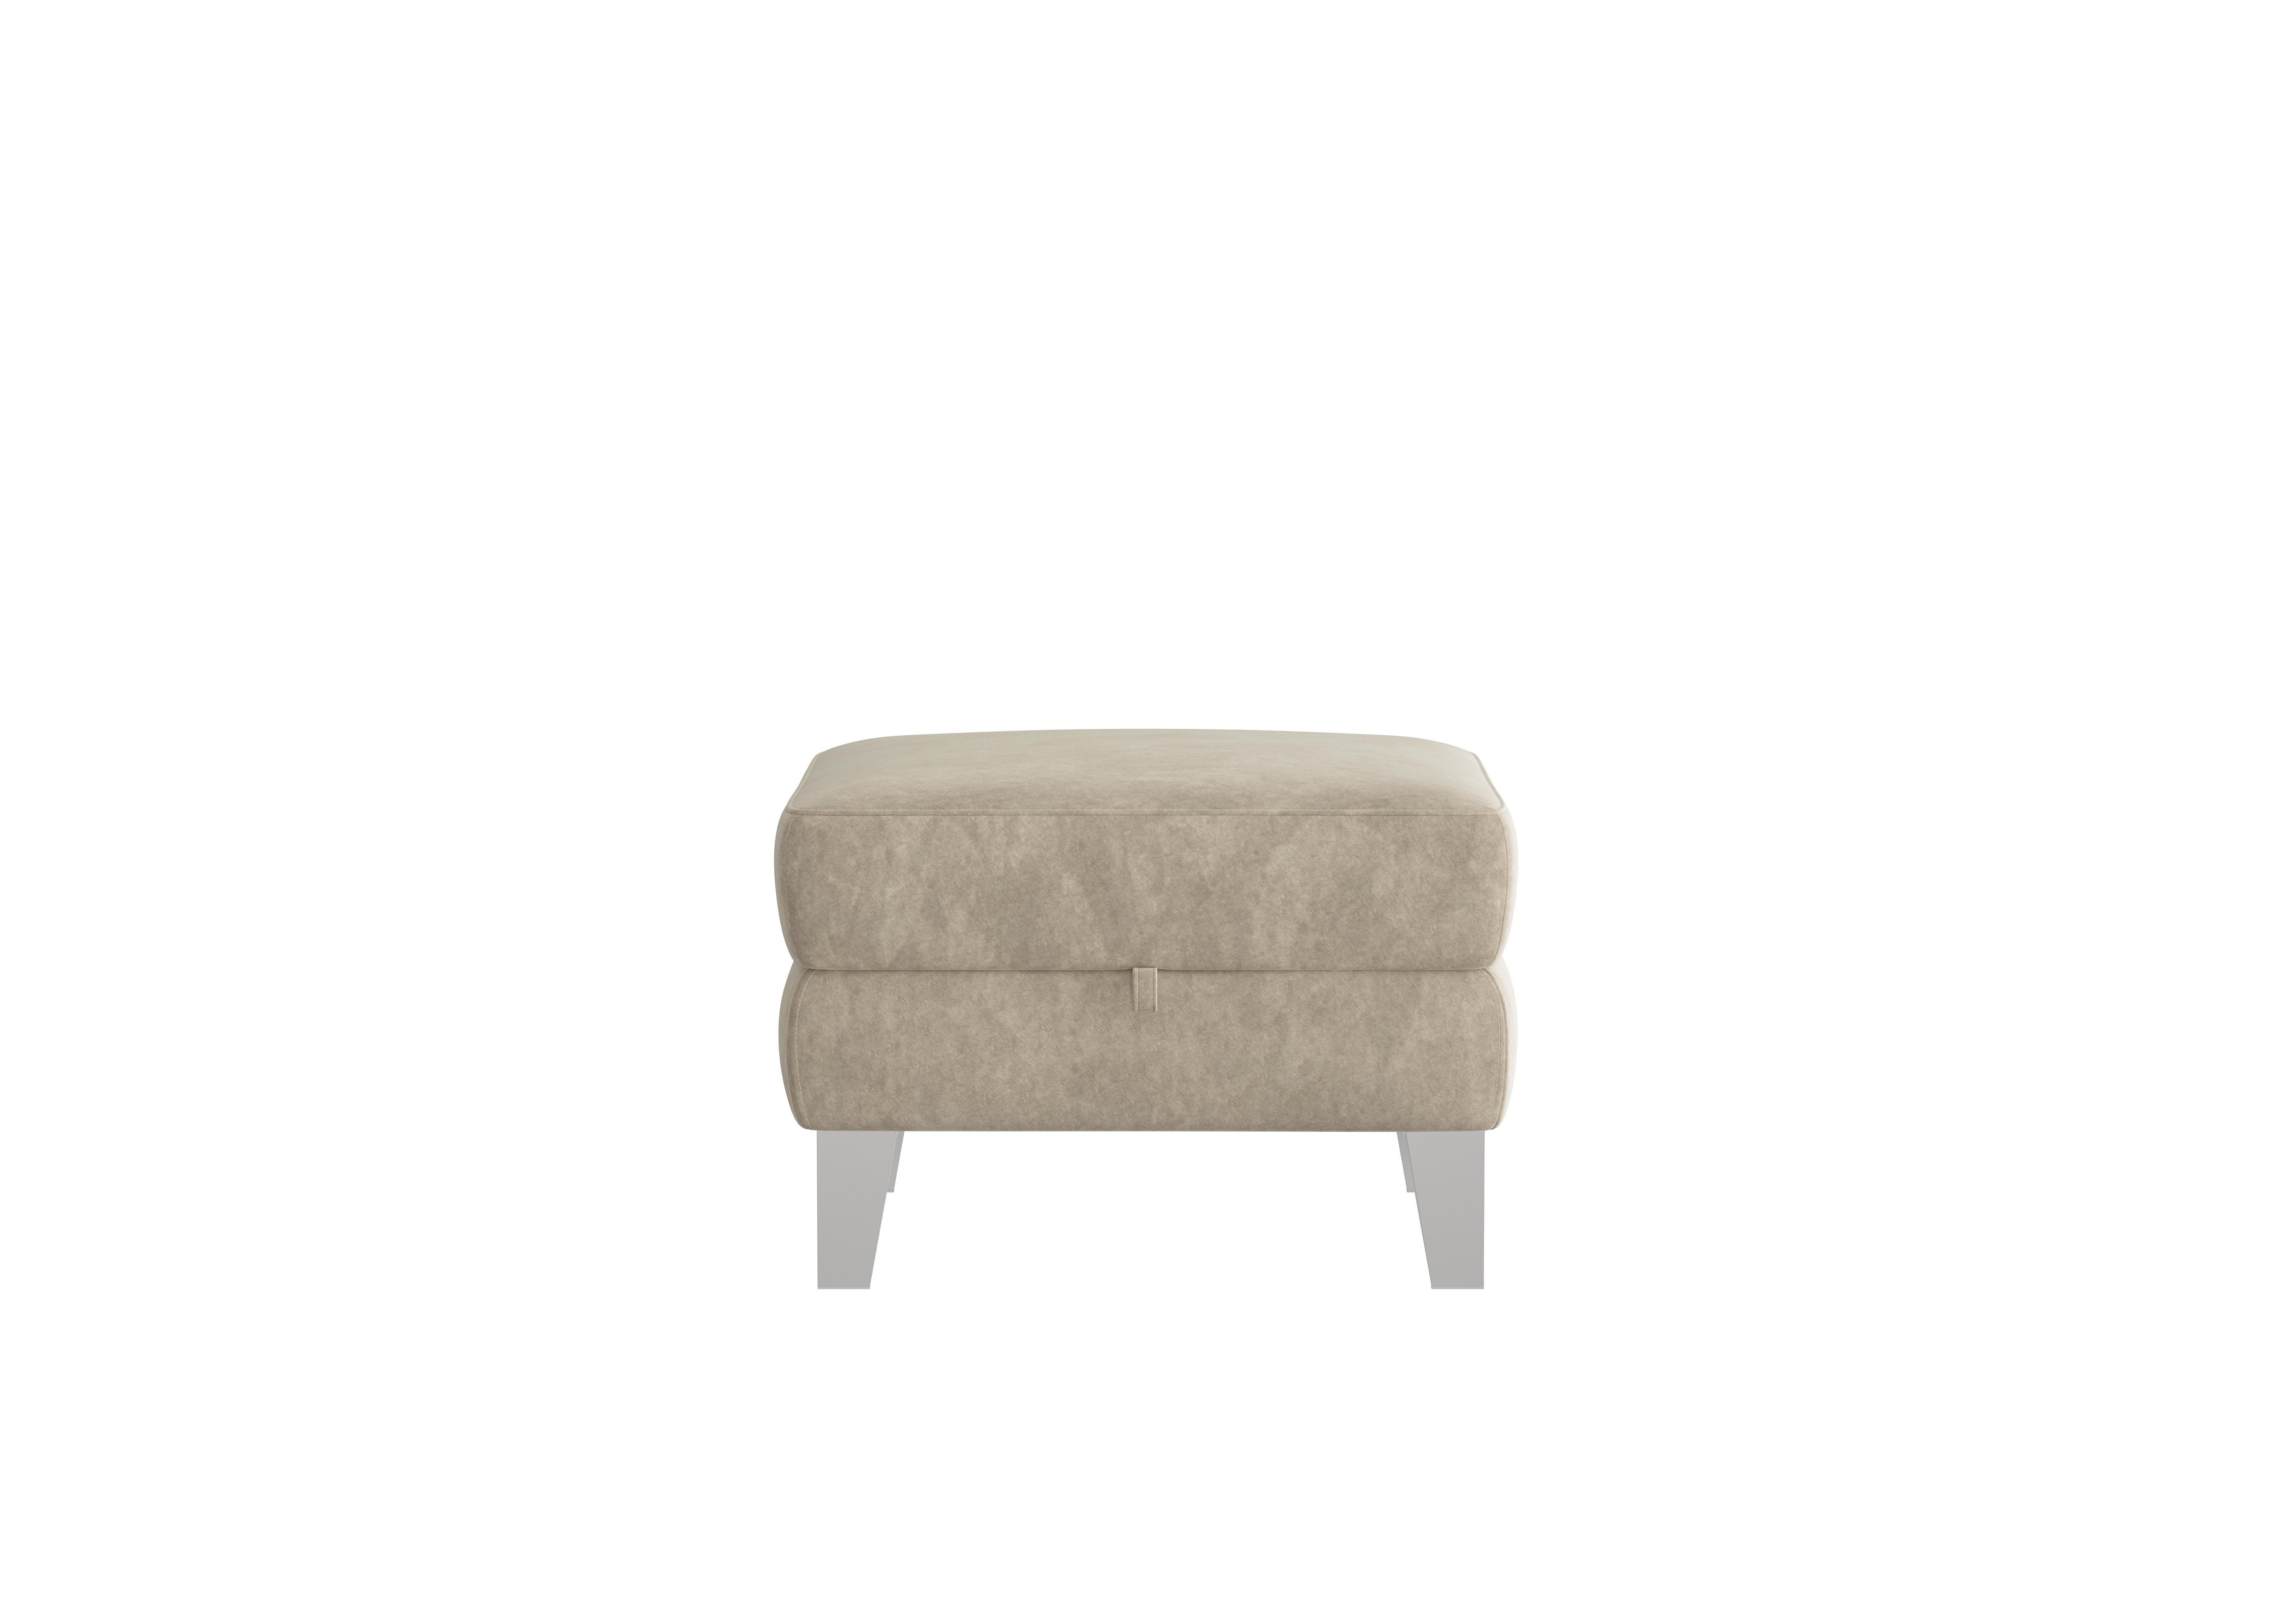 Amarilla Fabric Storage Footstool in Bfa-Bnn-R26 Cream on Furniture Village